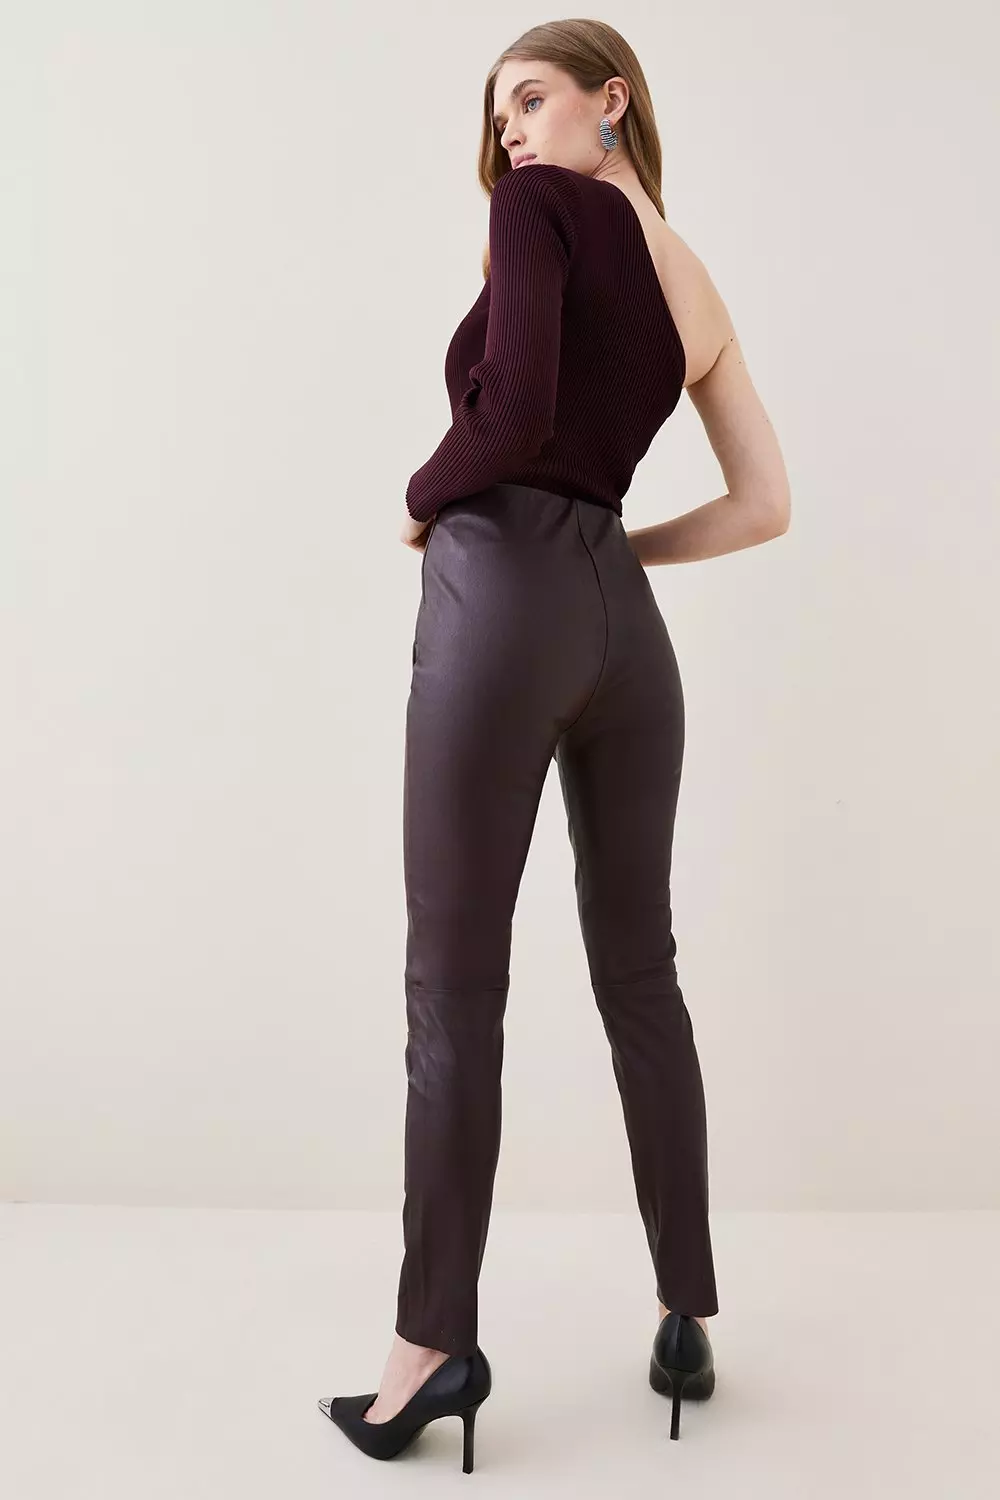 Plus Size Stretch Leather Legging | Karen Millen